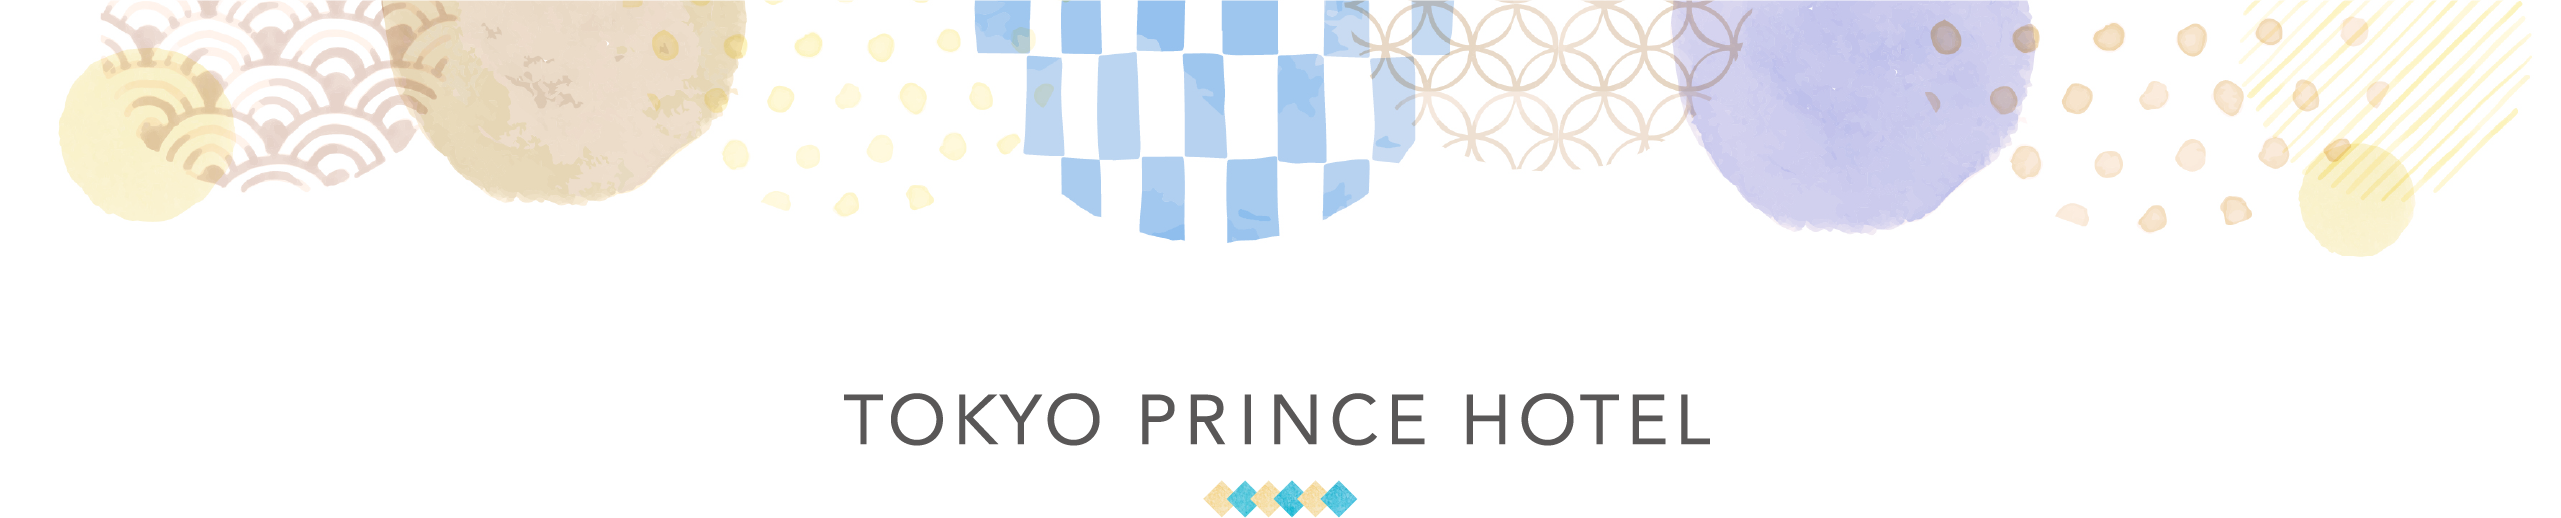 TOKYO PRINCE HOTEL